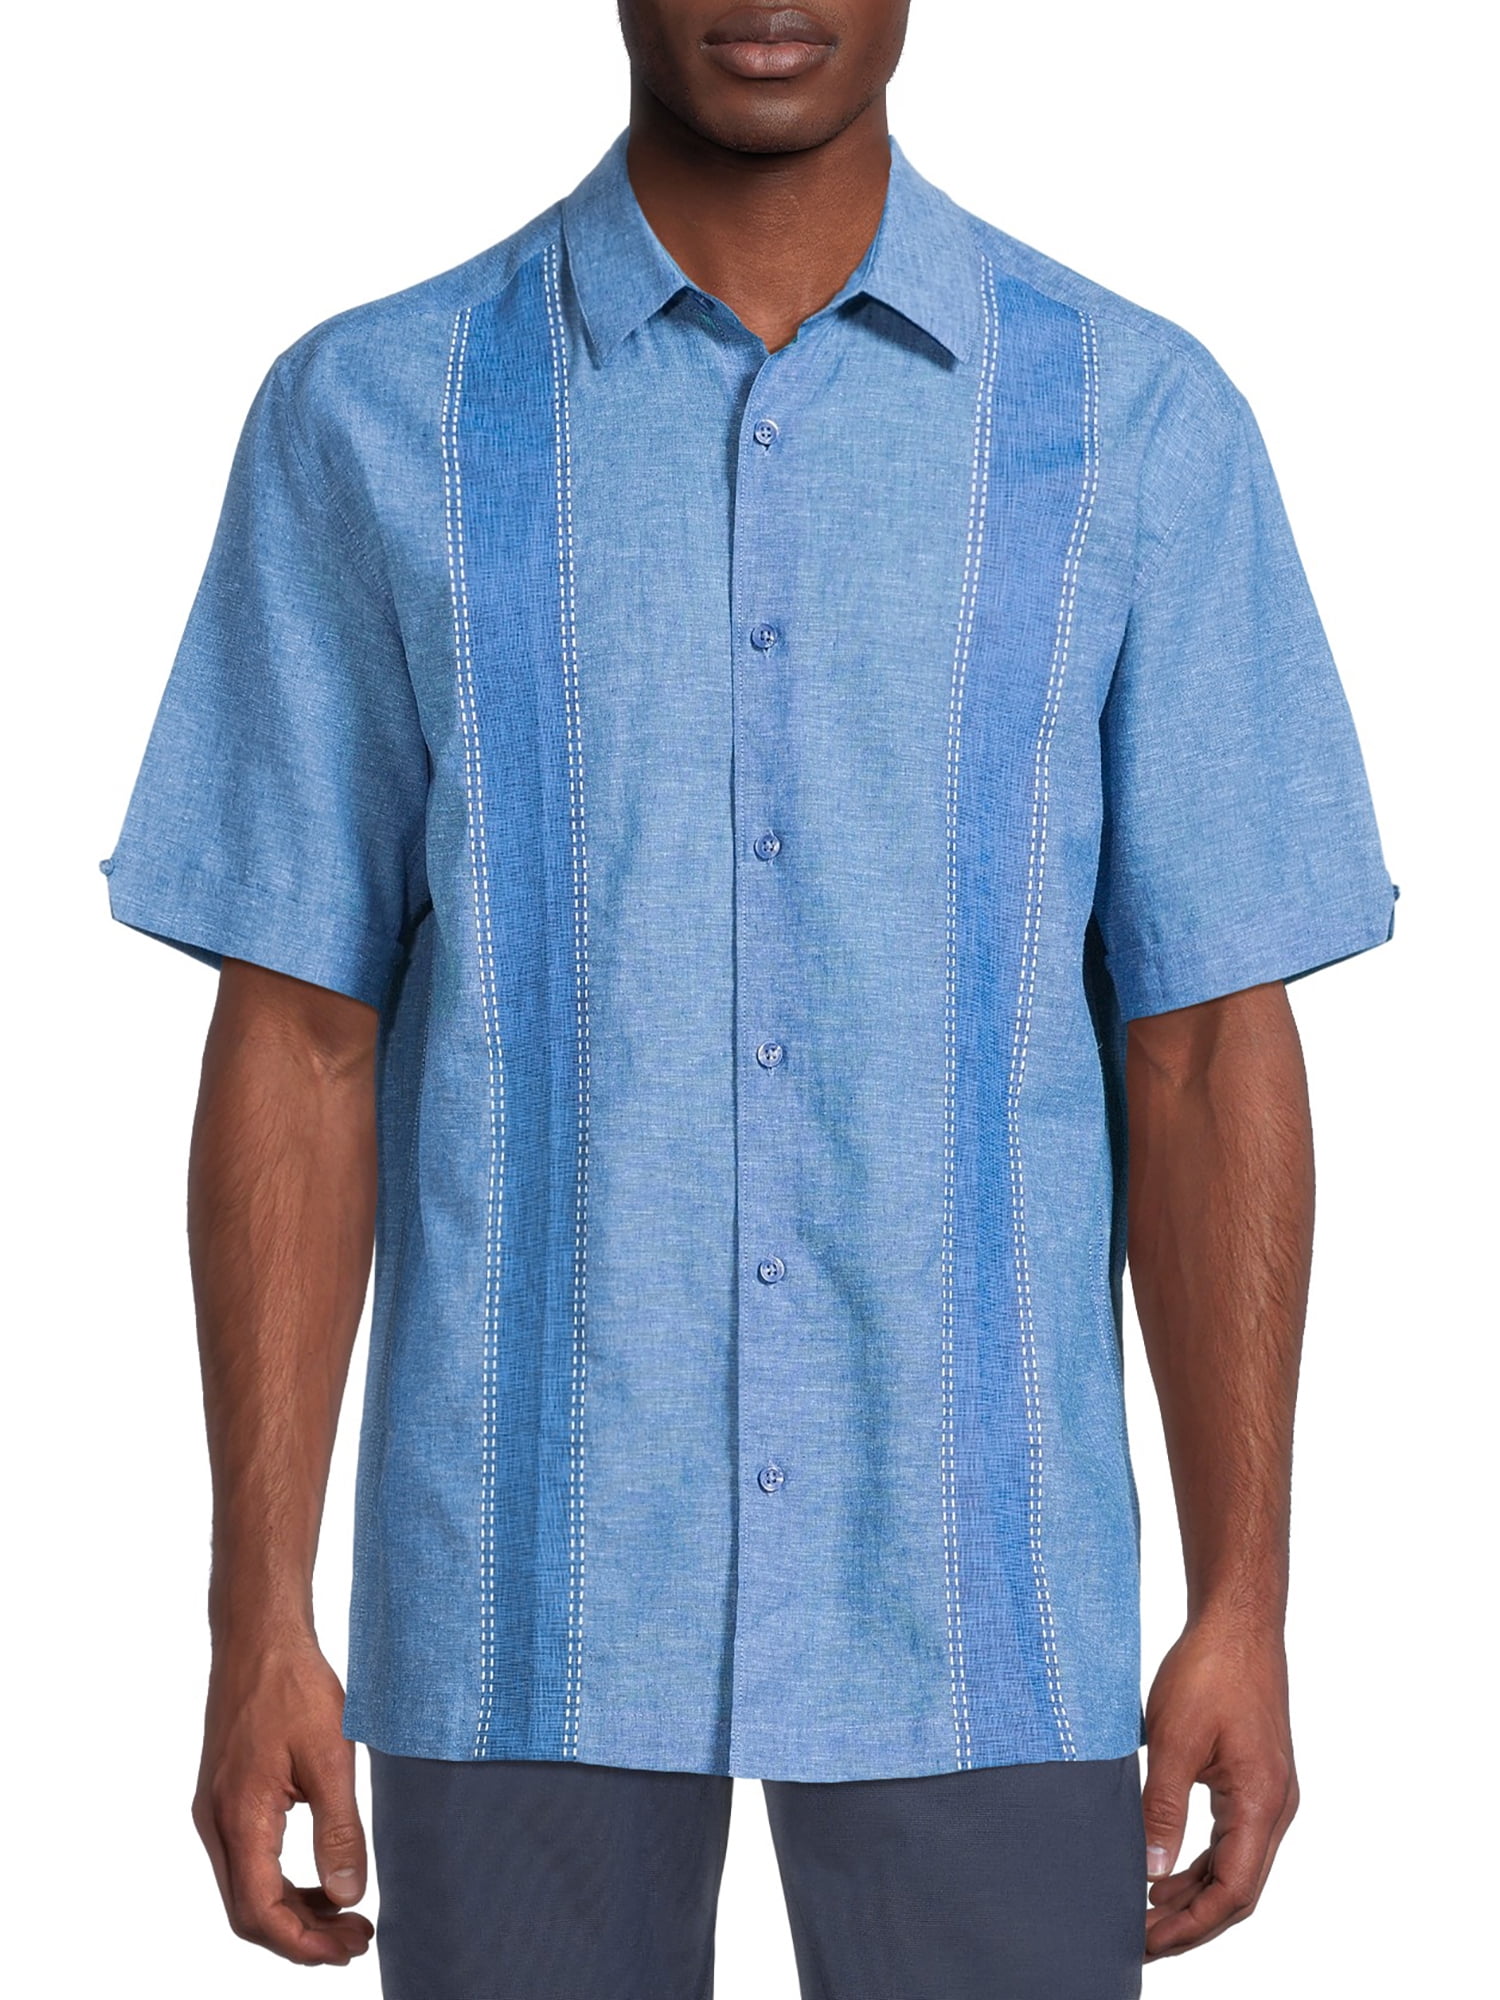 Cafe Luna Men's Button-Front Woven Shirt with Short Sleeves - Walmart.com